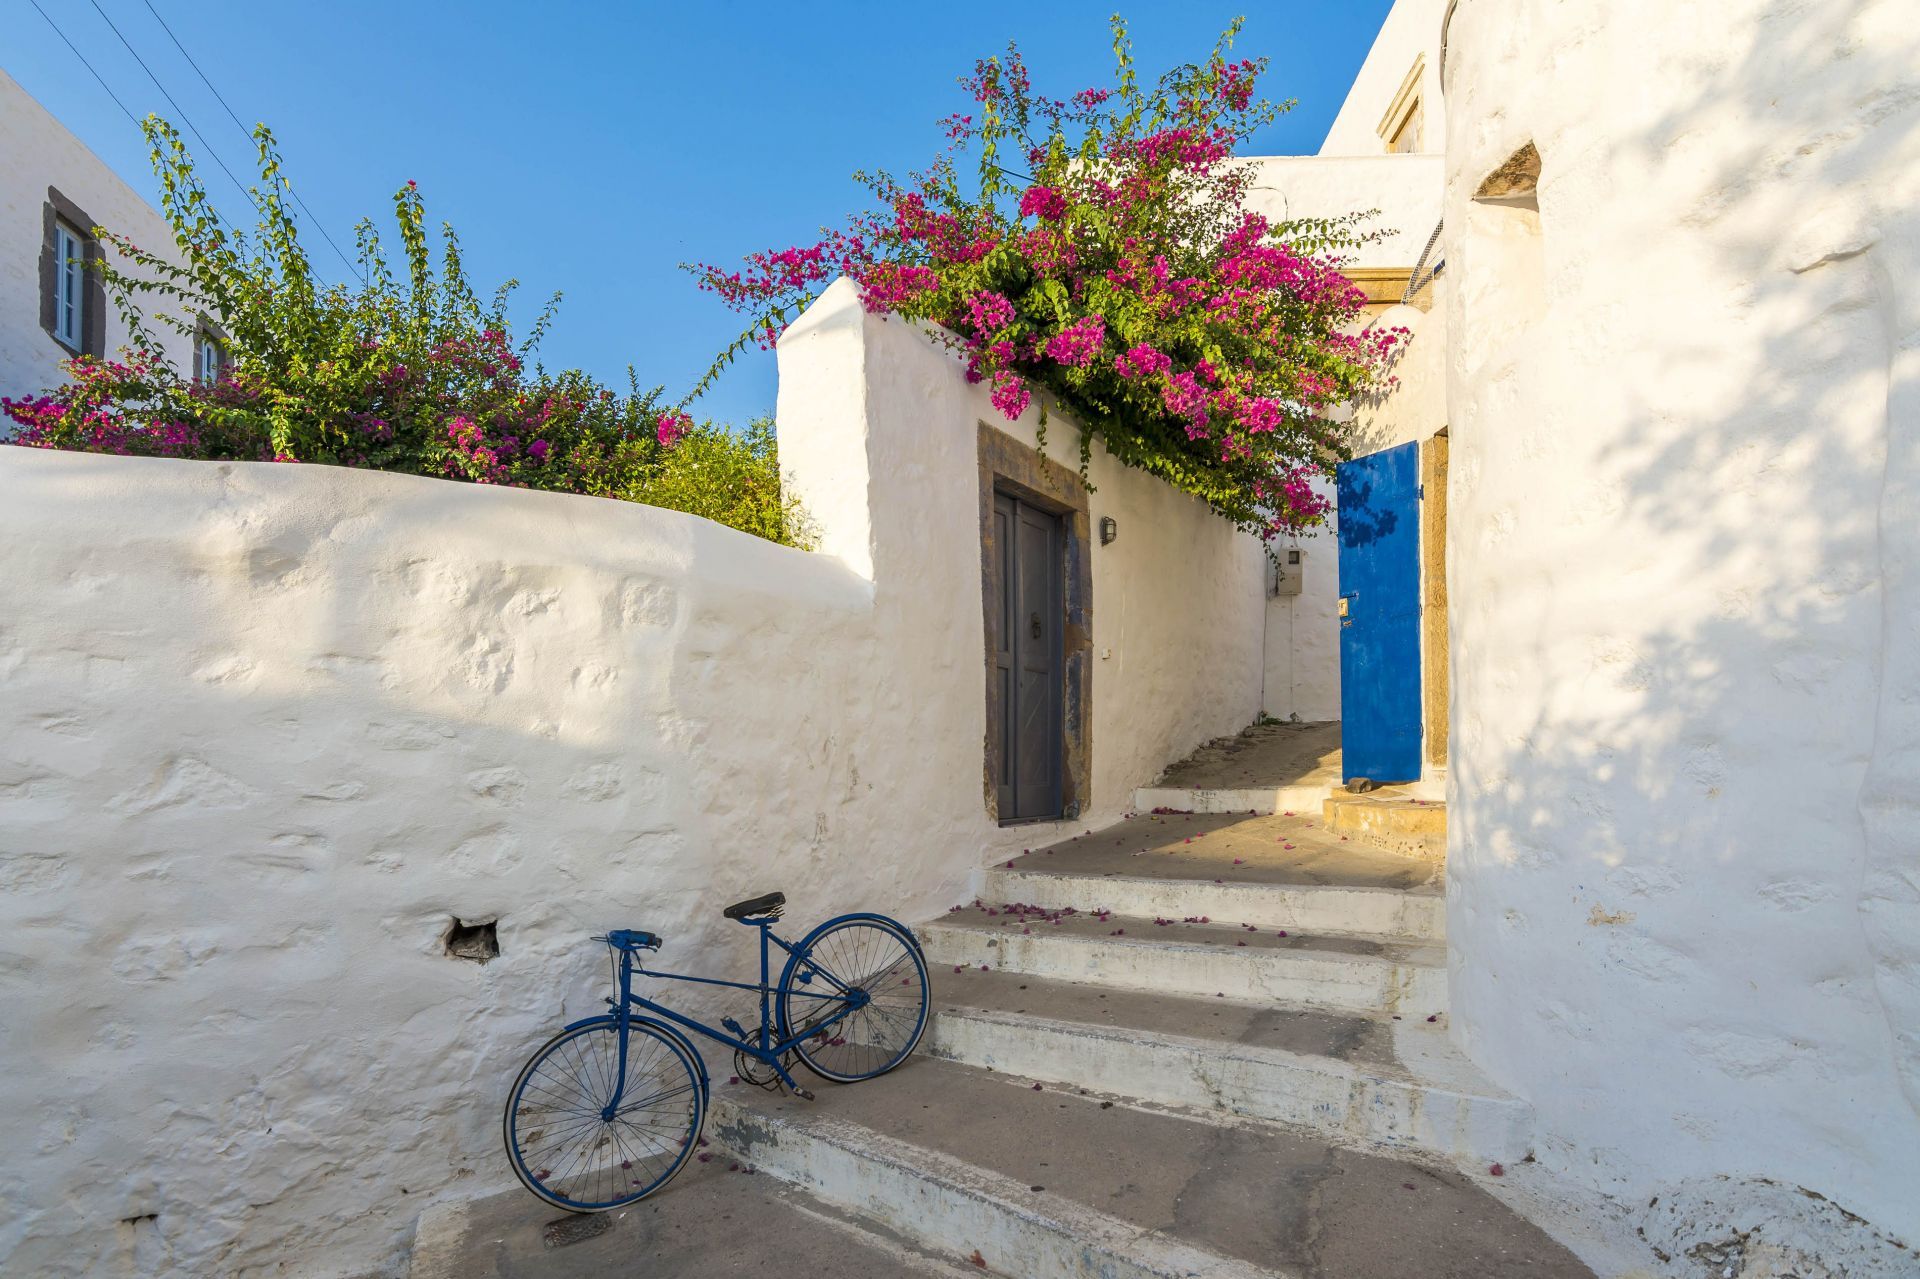 Boutique hotels hidden in the alleys of Chora village, in Patmos